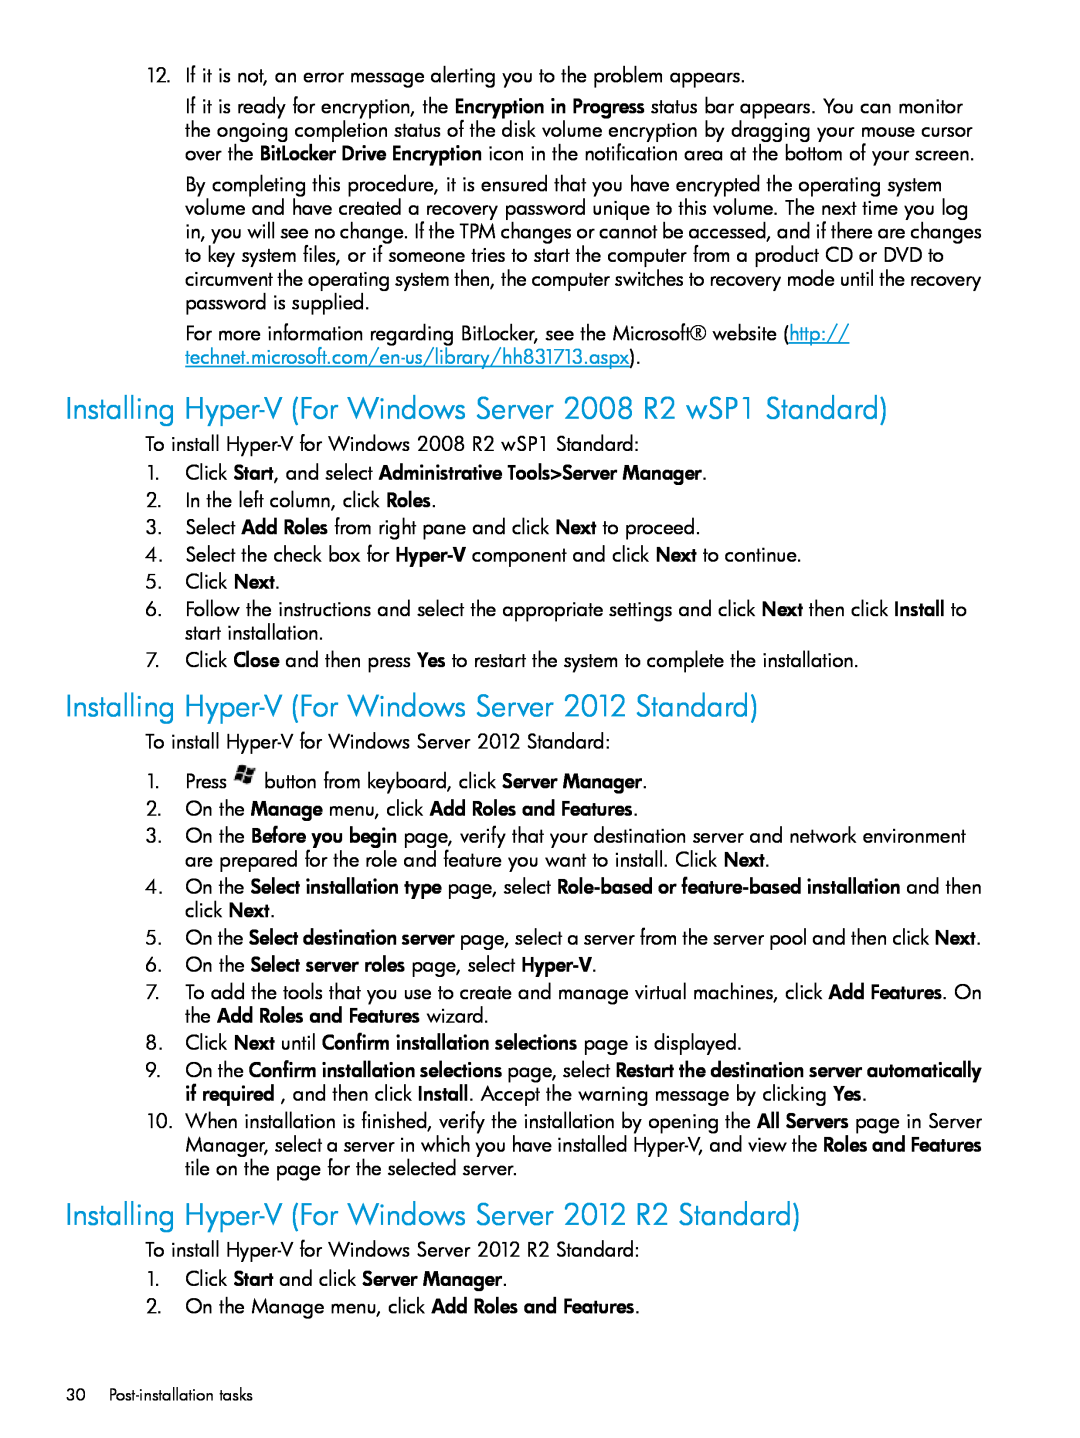 HP Microsoft Windows Server 2012 Installing Hyper-V For Windows Server 2008 R2 wSP1 Standard, Post-installation tasks 